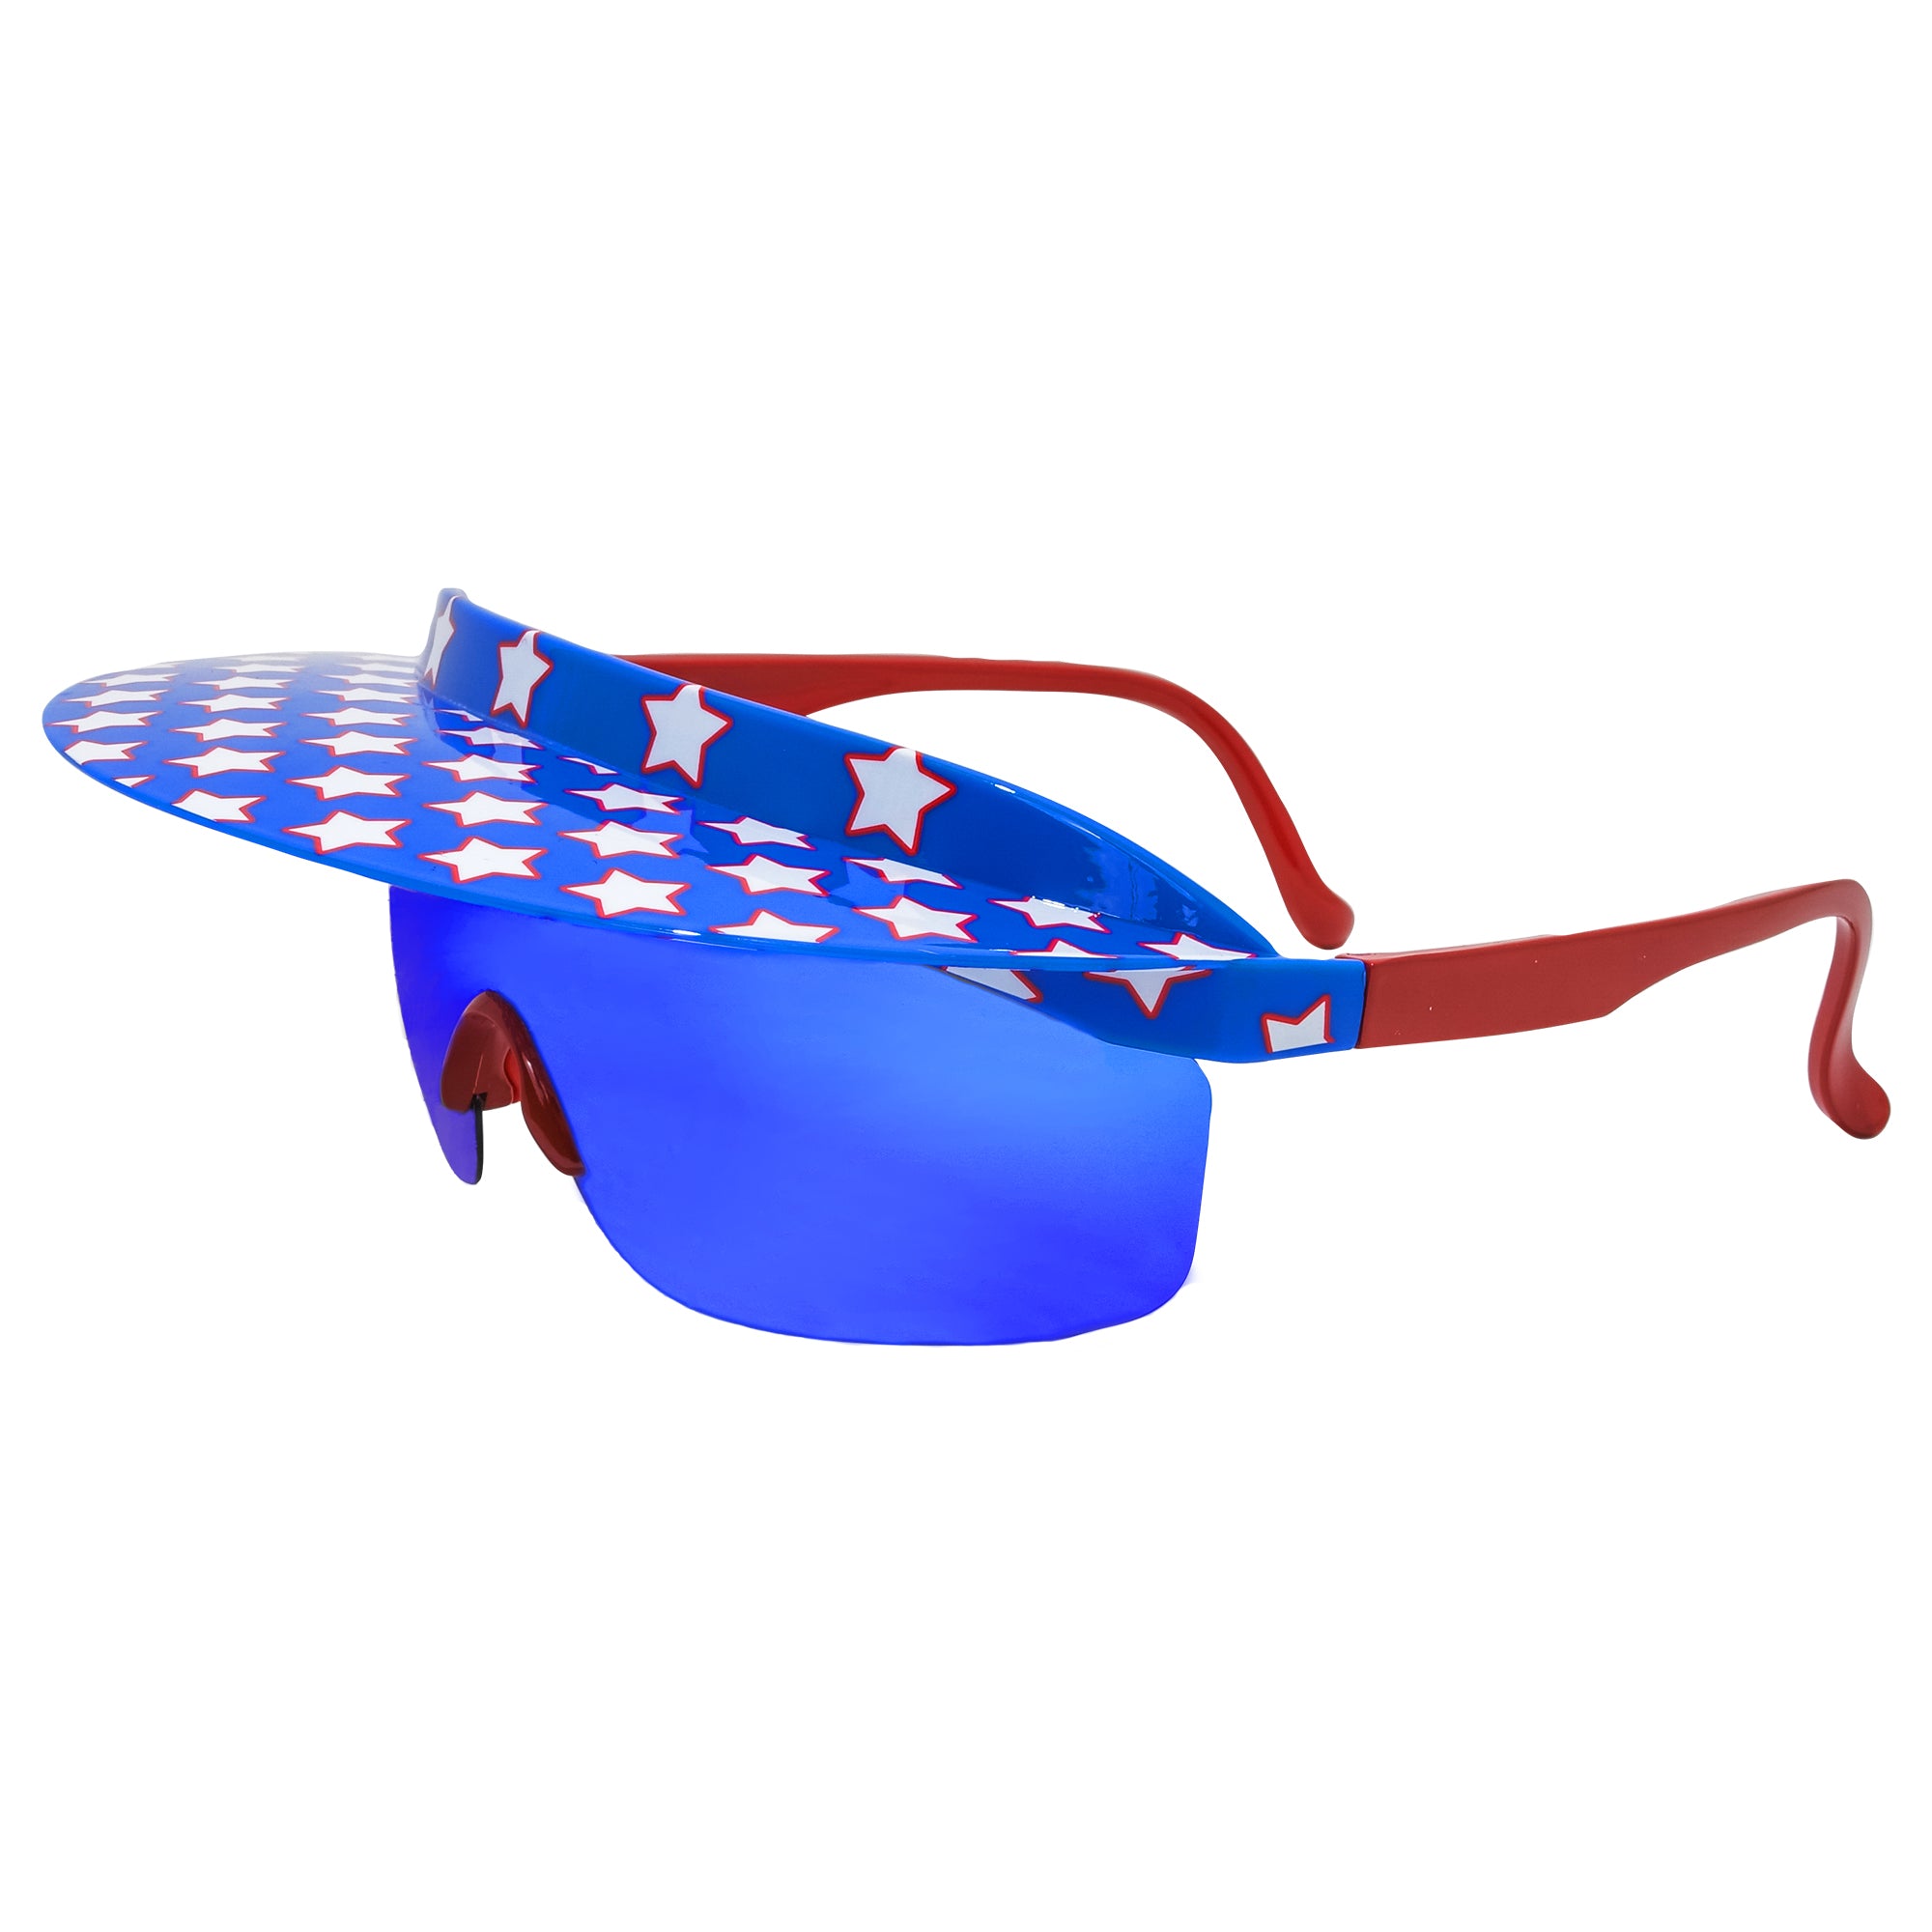 Presidential 90s 80s throwback 4th of july new years USA retro visor UV400 sunglasses. Polarized visor shades custom B Fresh Gear red white blue stars.